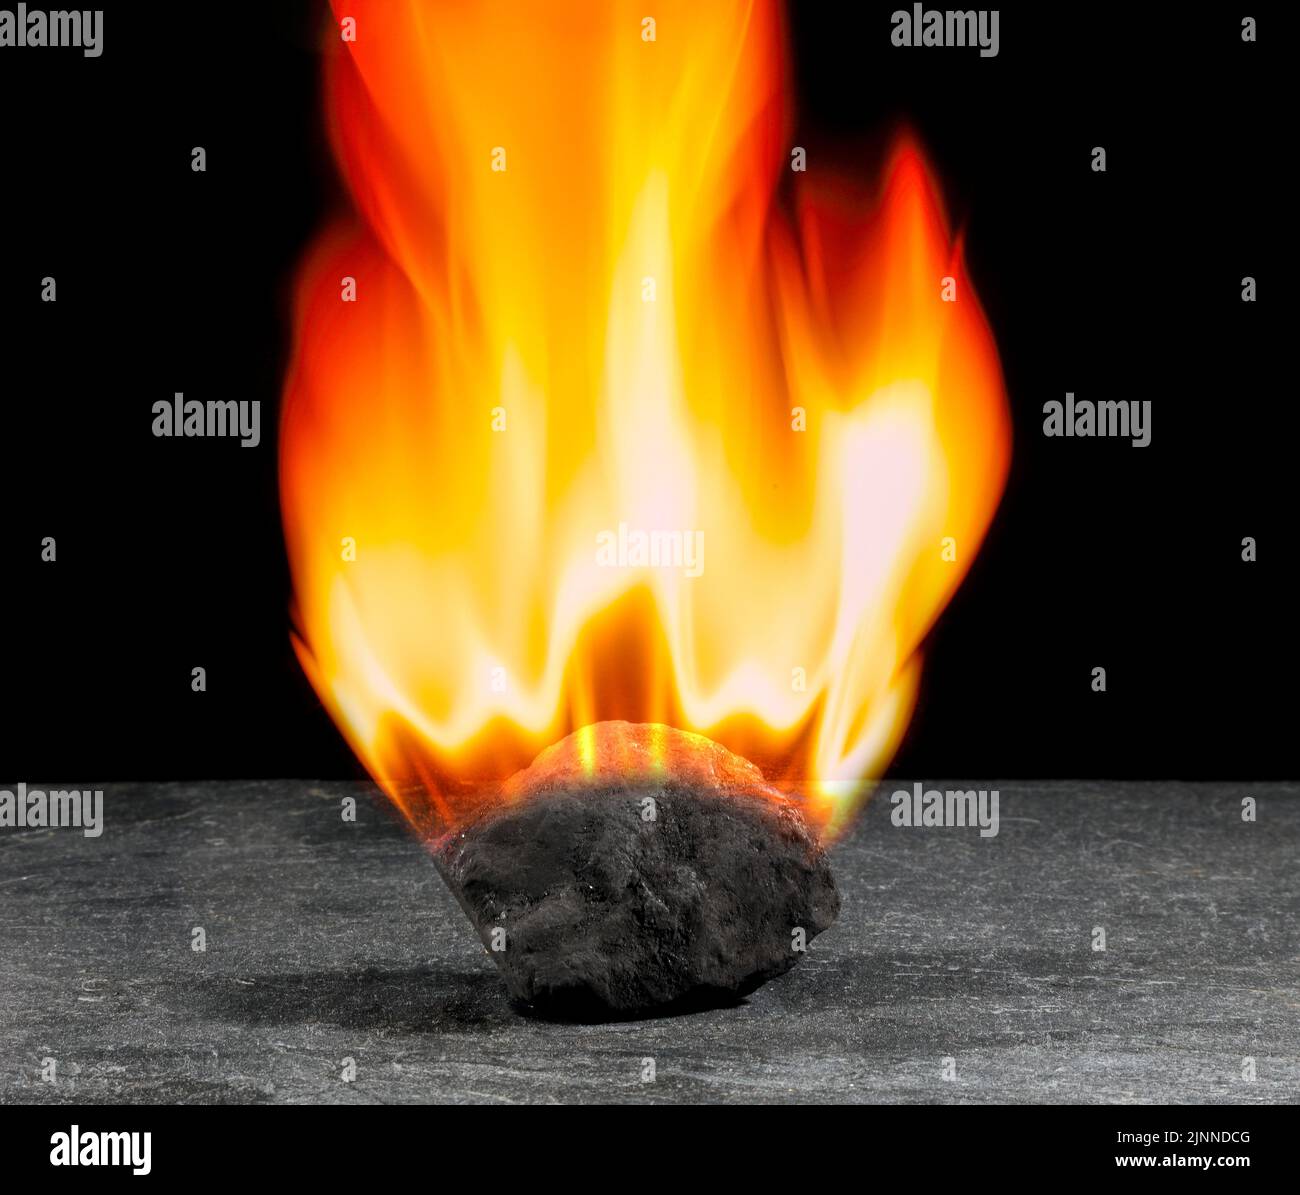 Burning lump of coal, illustration Stock Photo